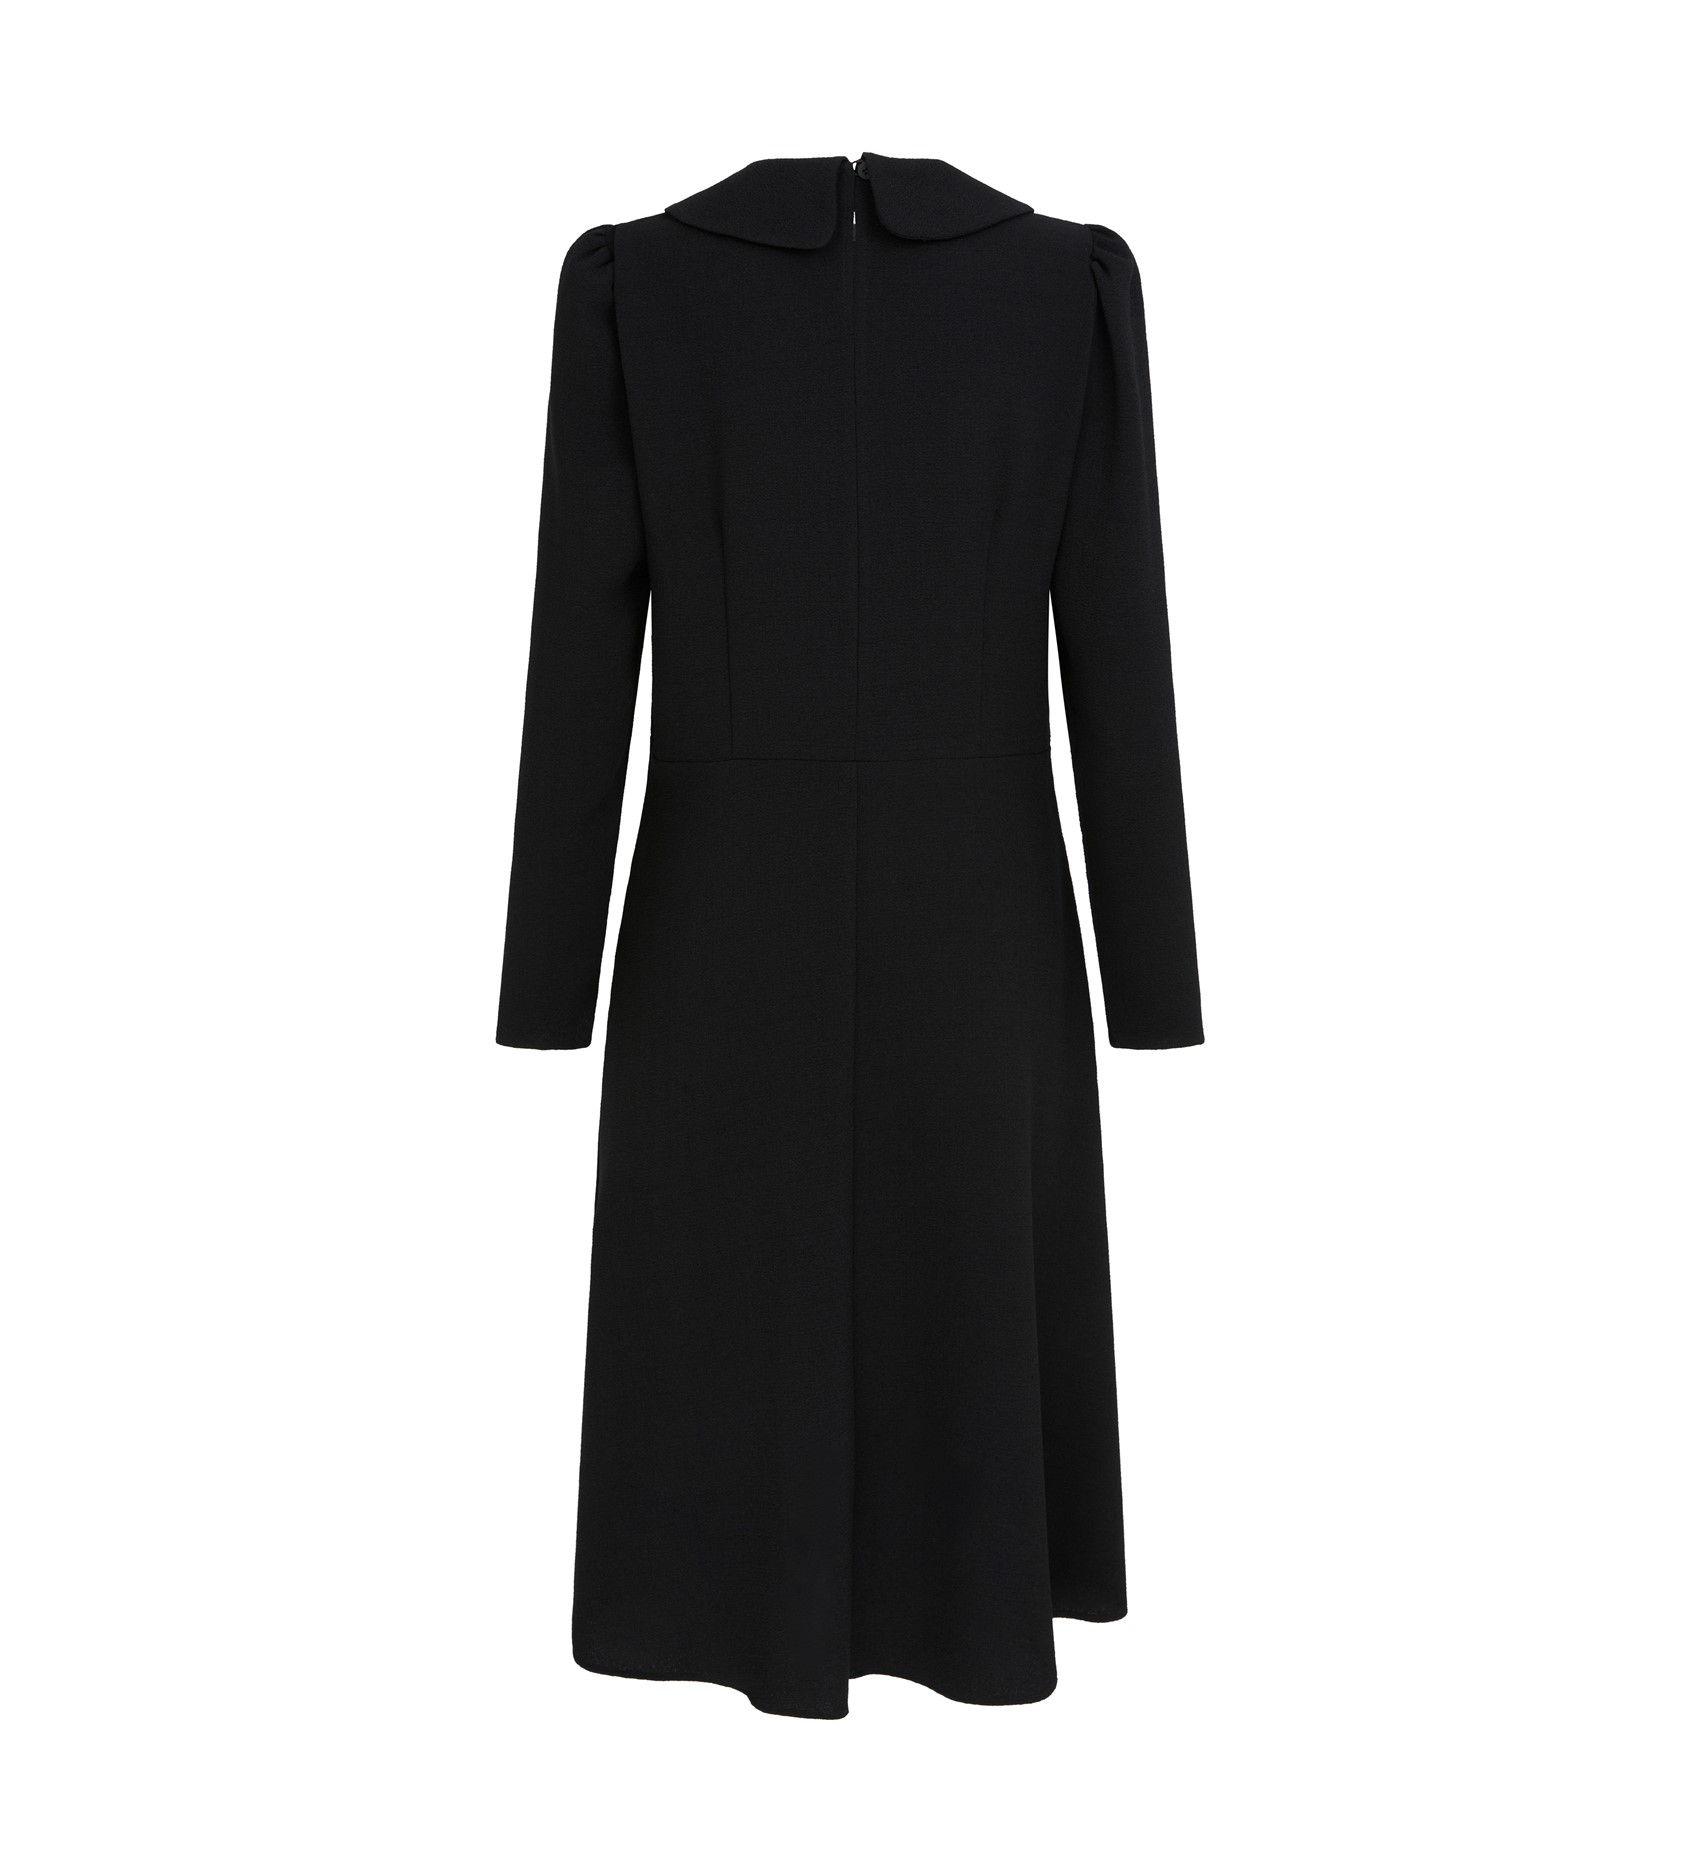 Jadey Black Knee Length Dress | Finery London